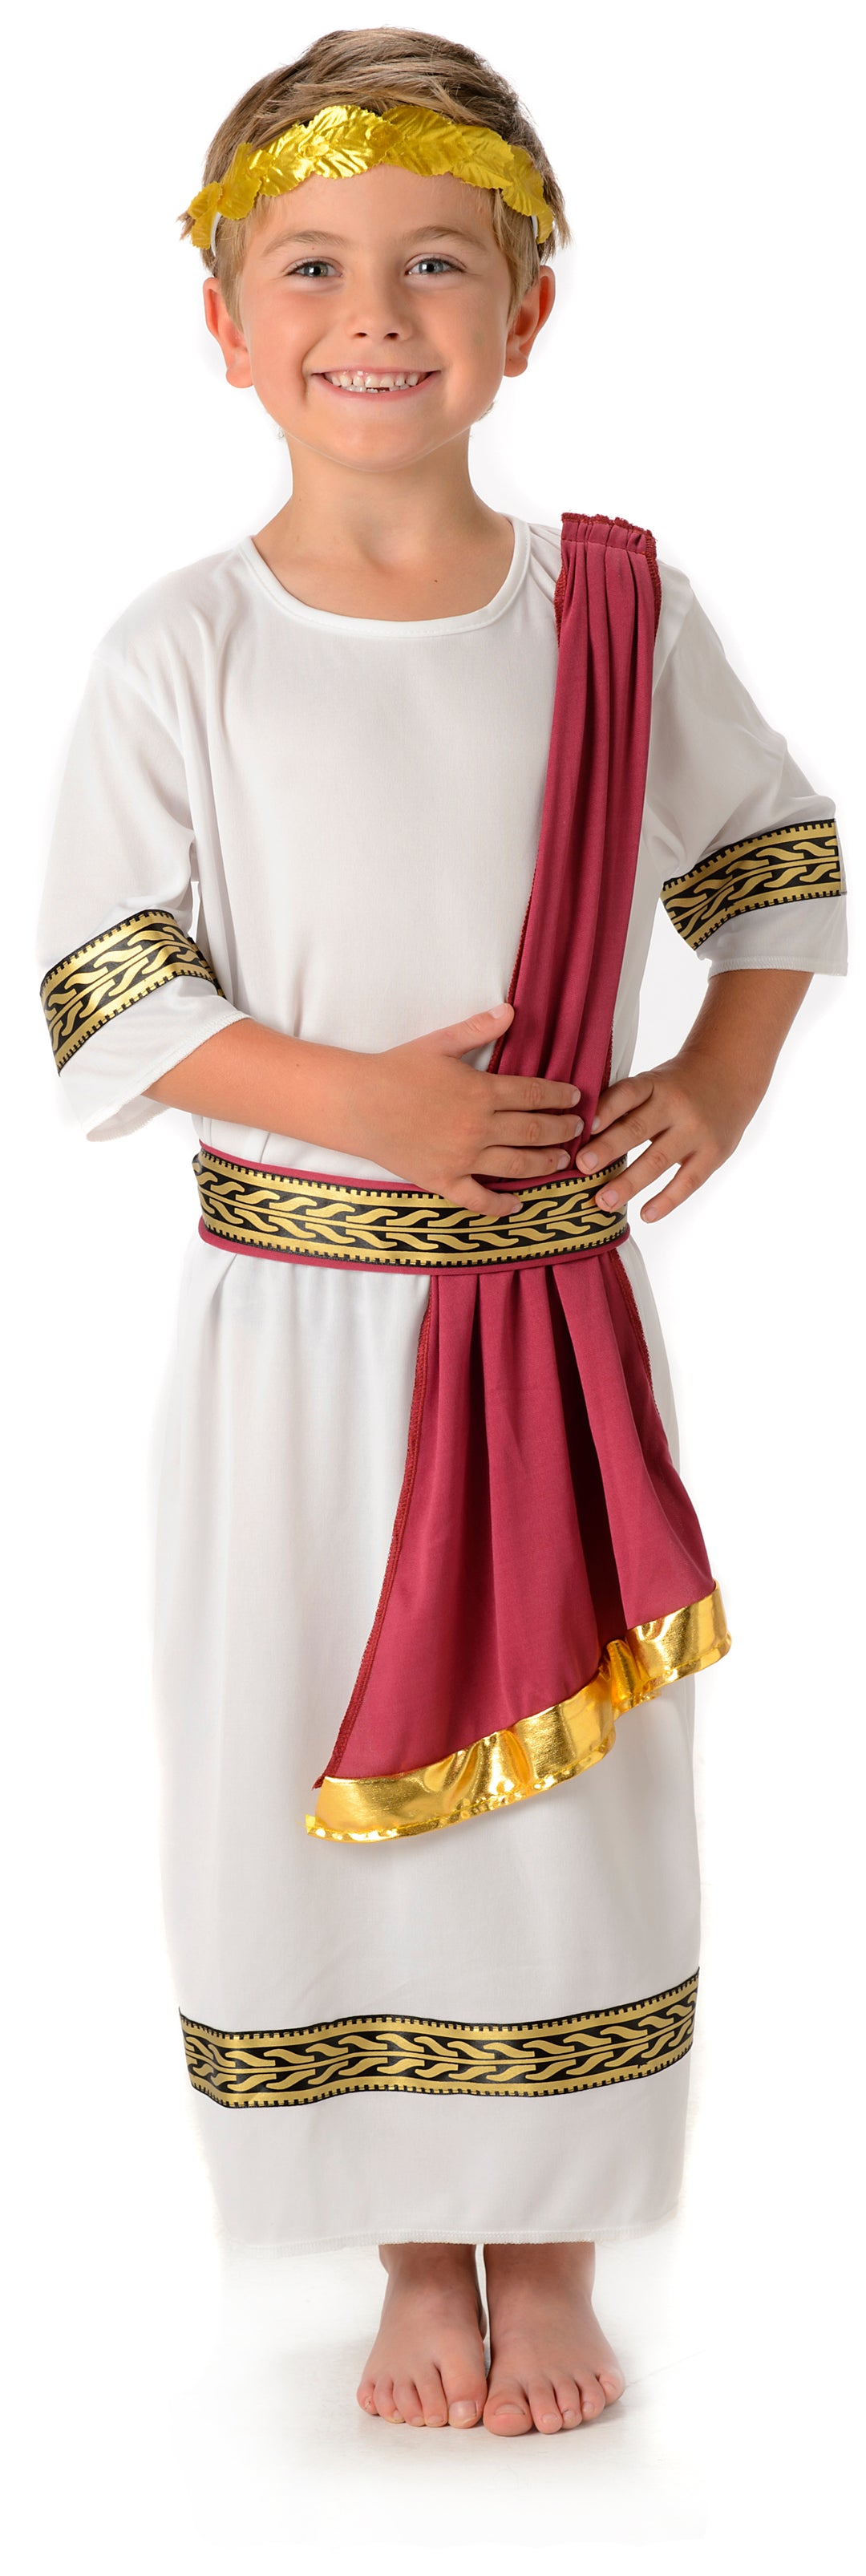 Imperial Roman Emperor Boys Fancy Dress Historical Costume